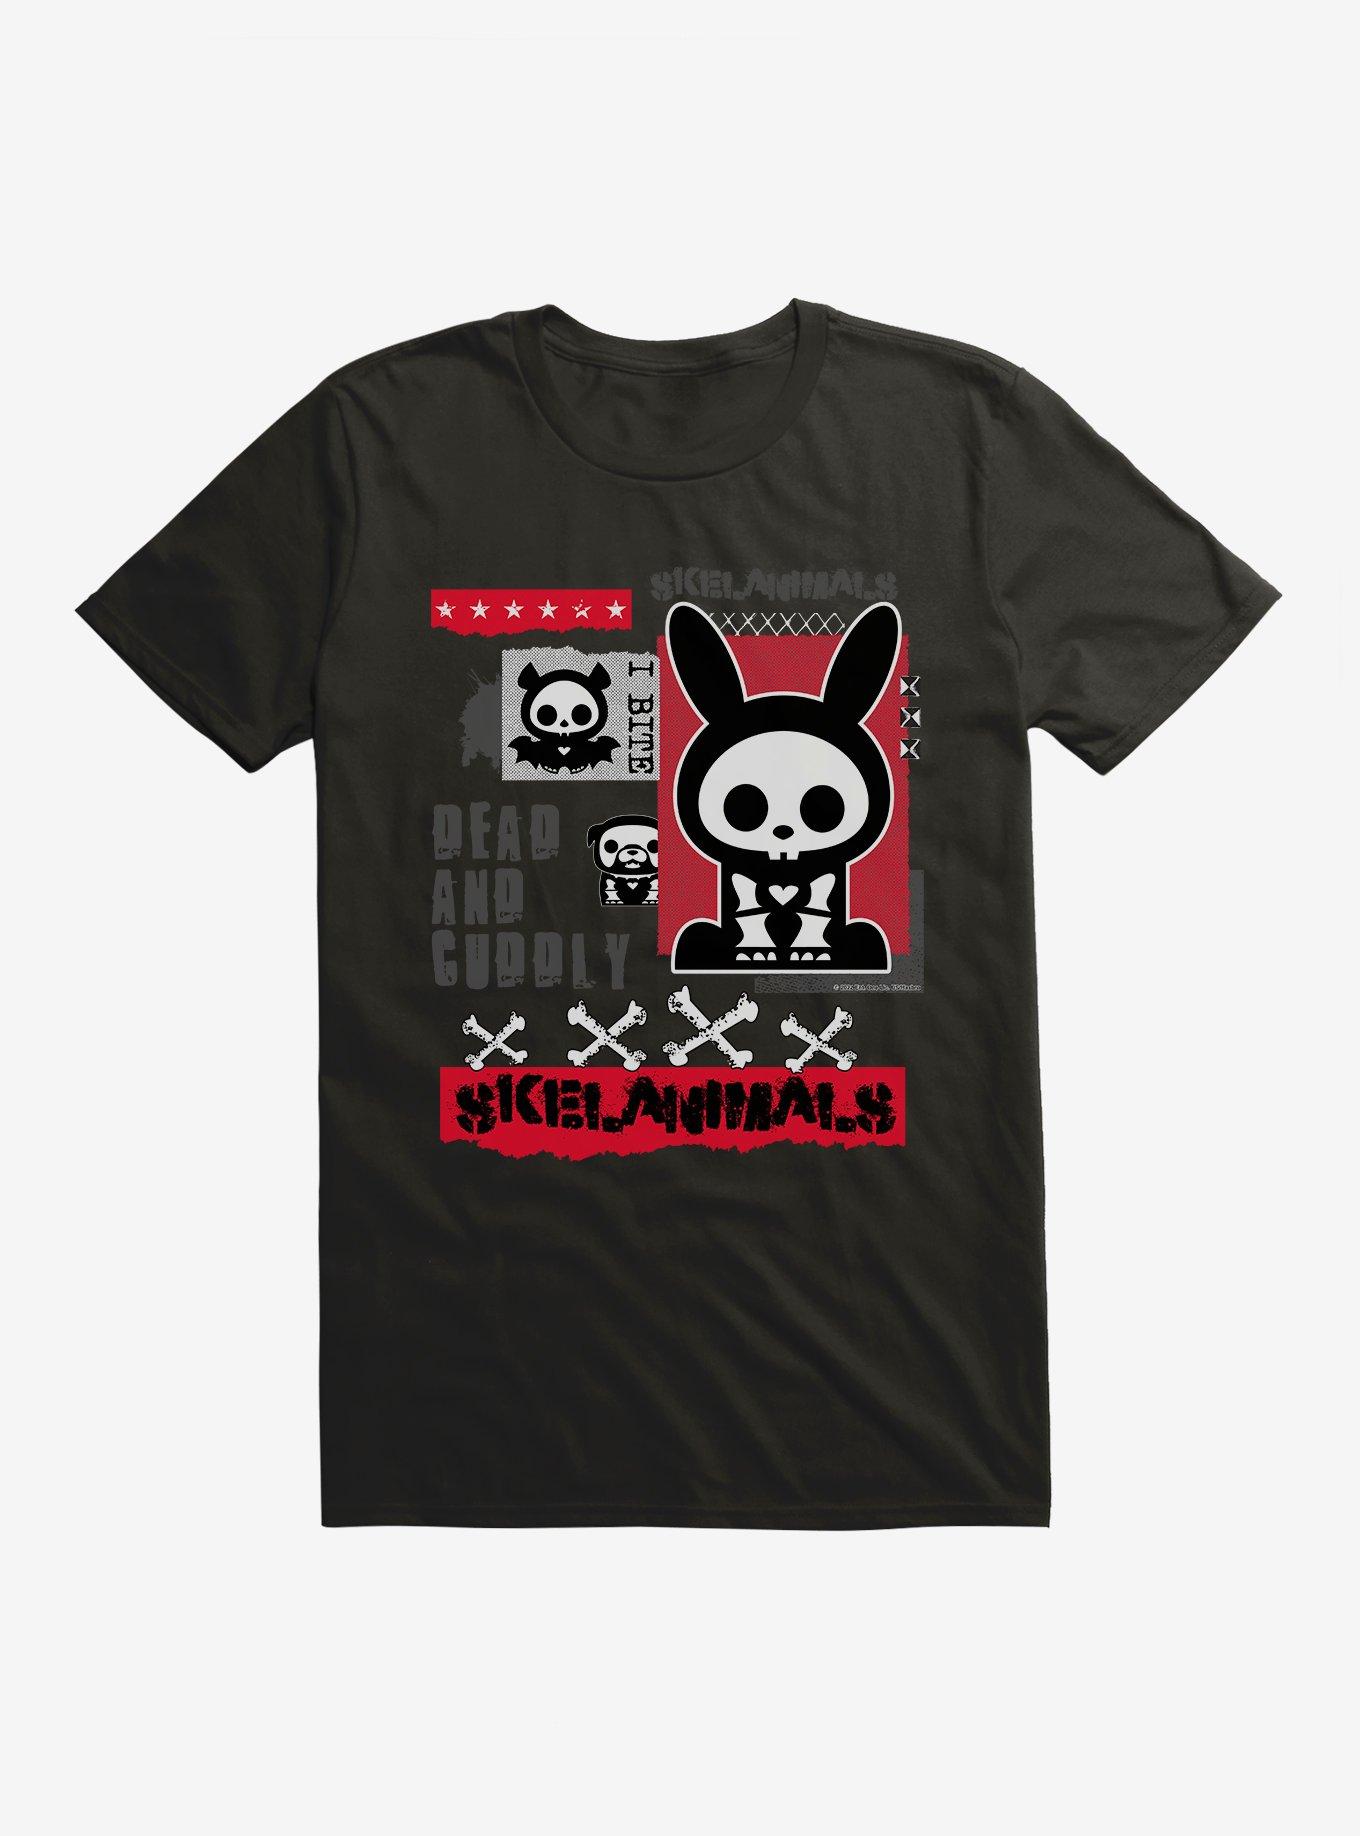 Skelanimals Dead And Cuddly T-Shirt